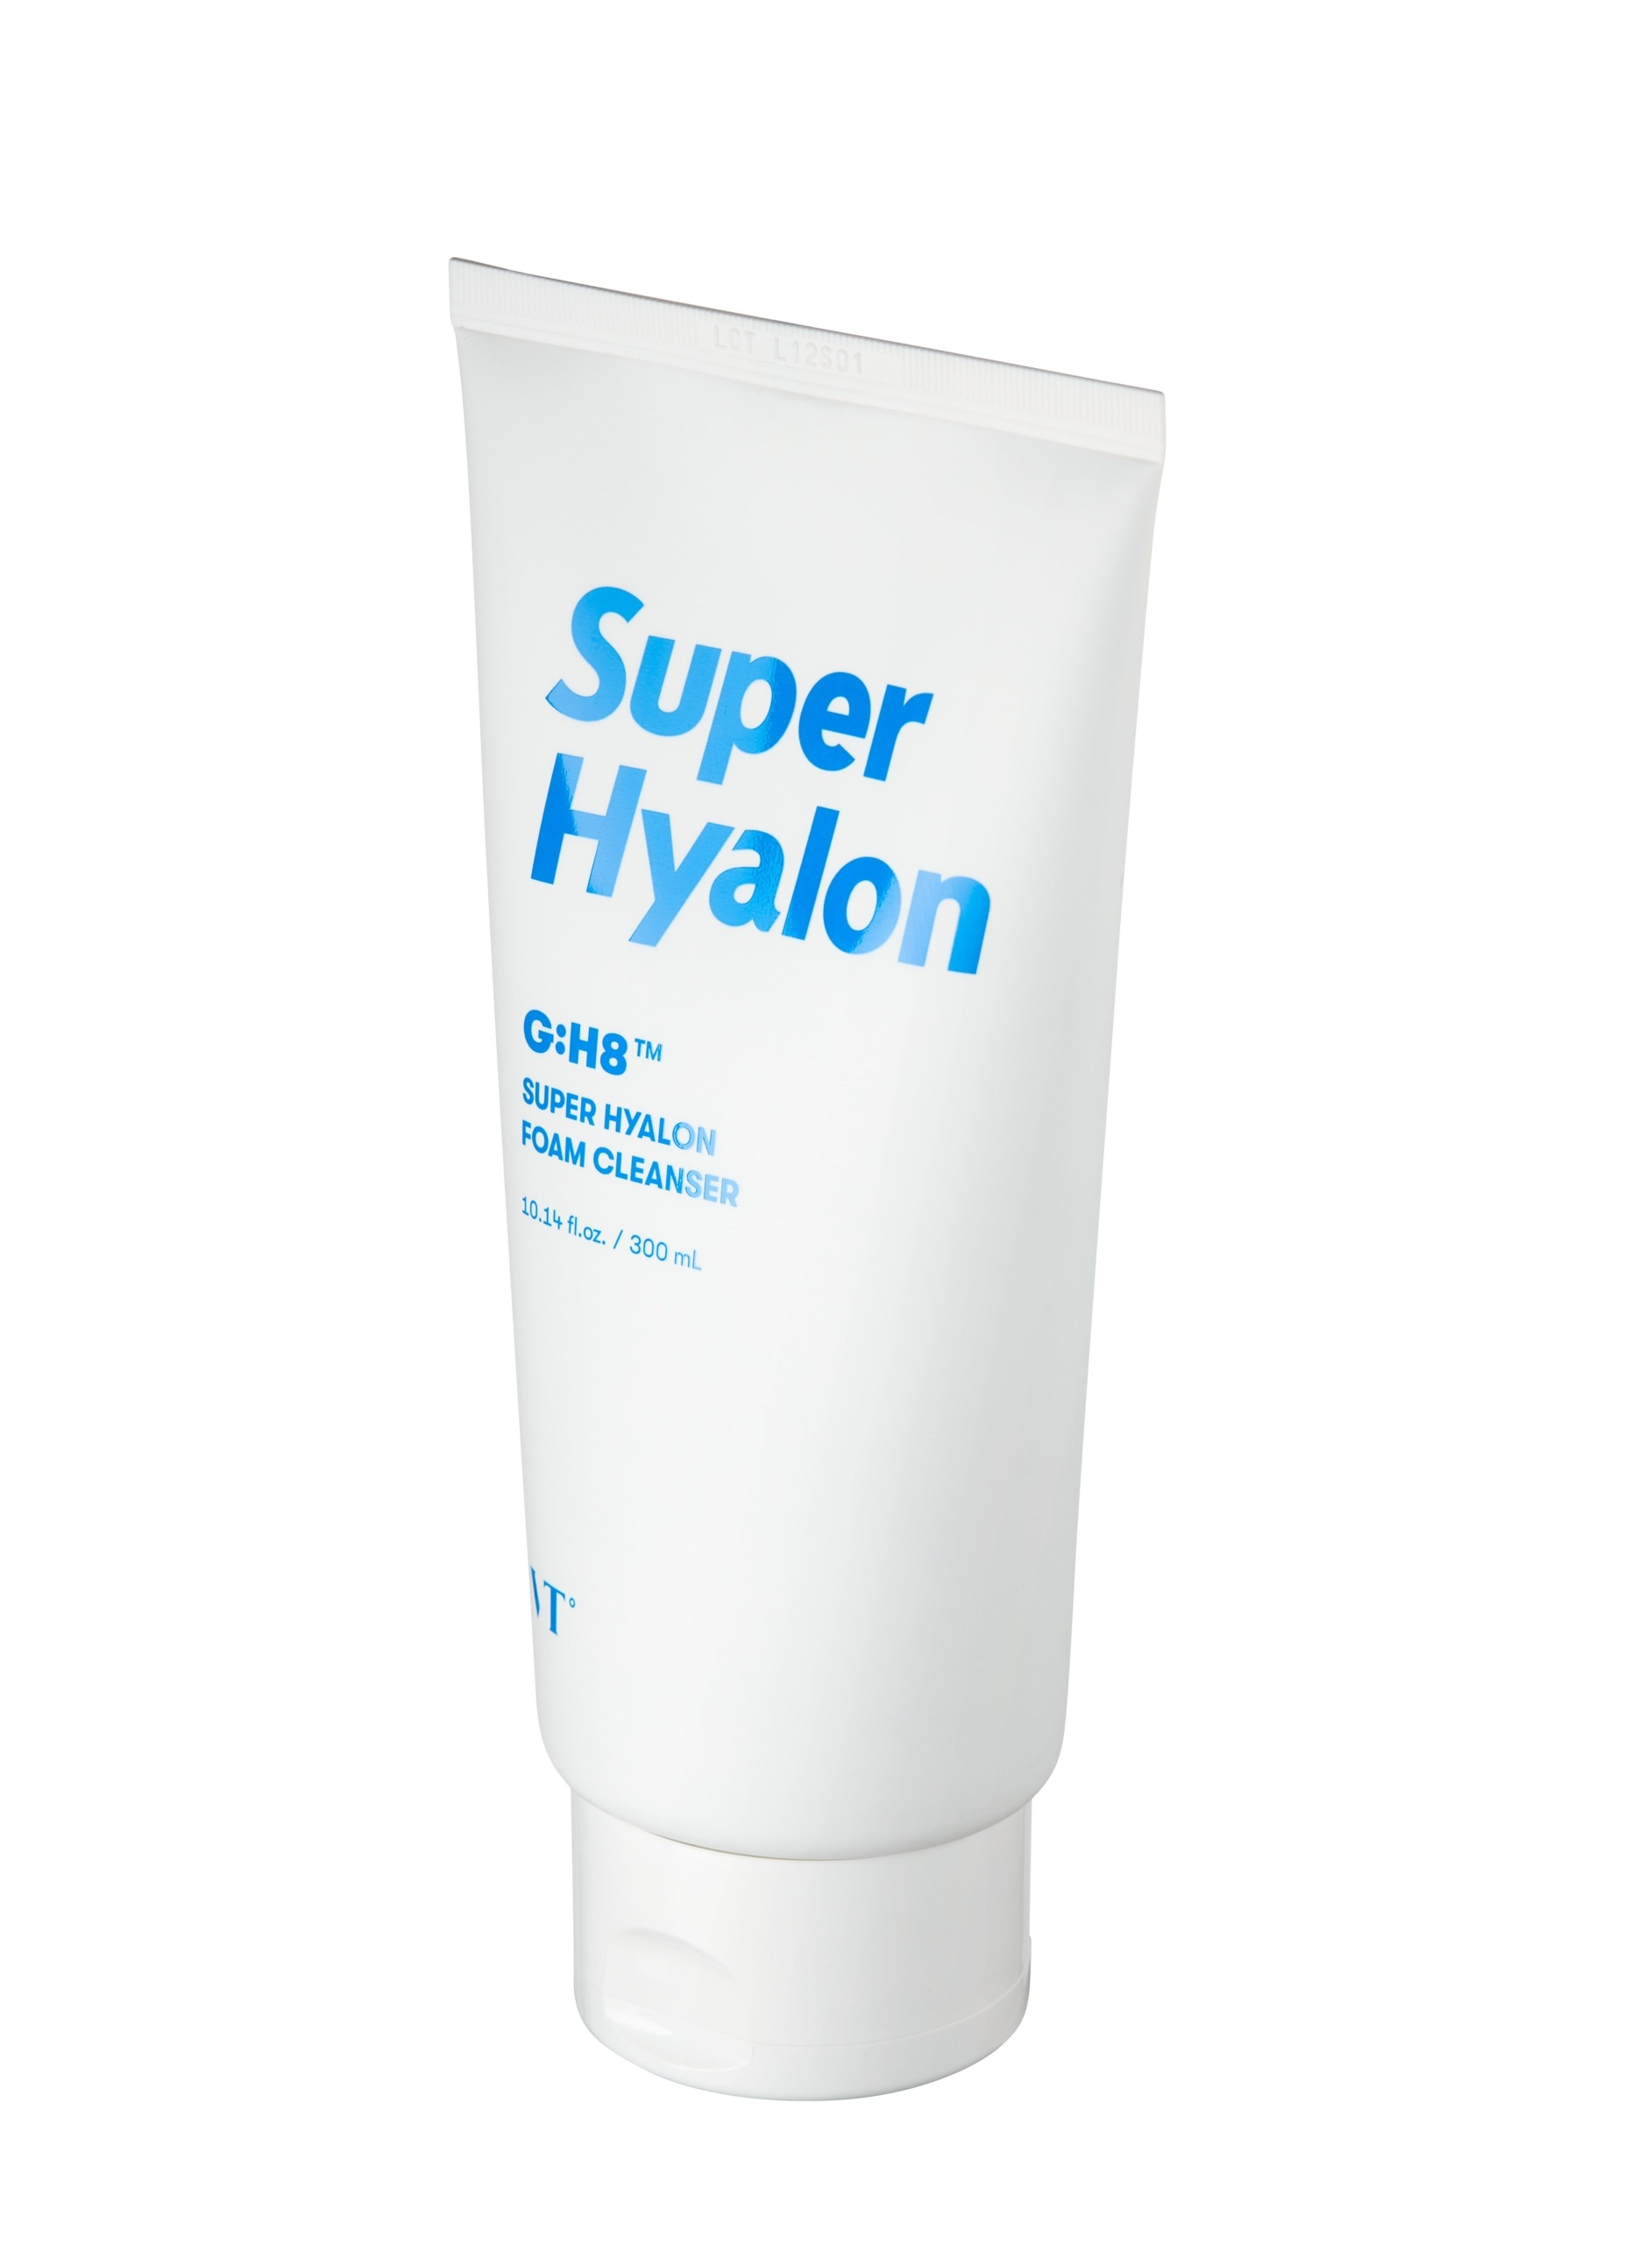 VT super hyalon foam cleanser (2)-compressed